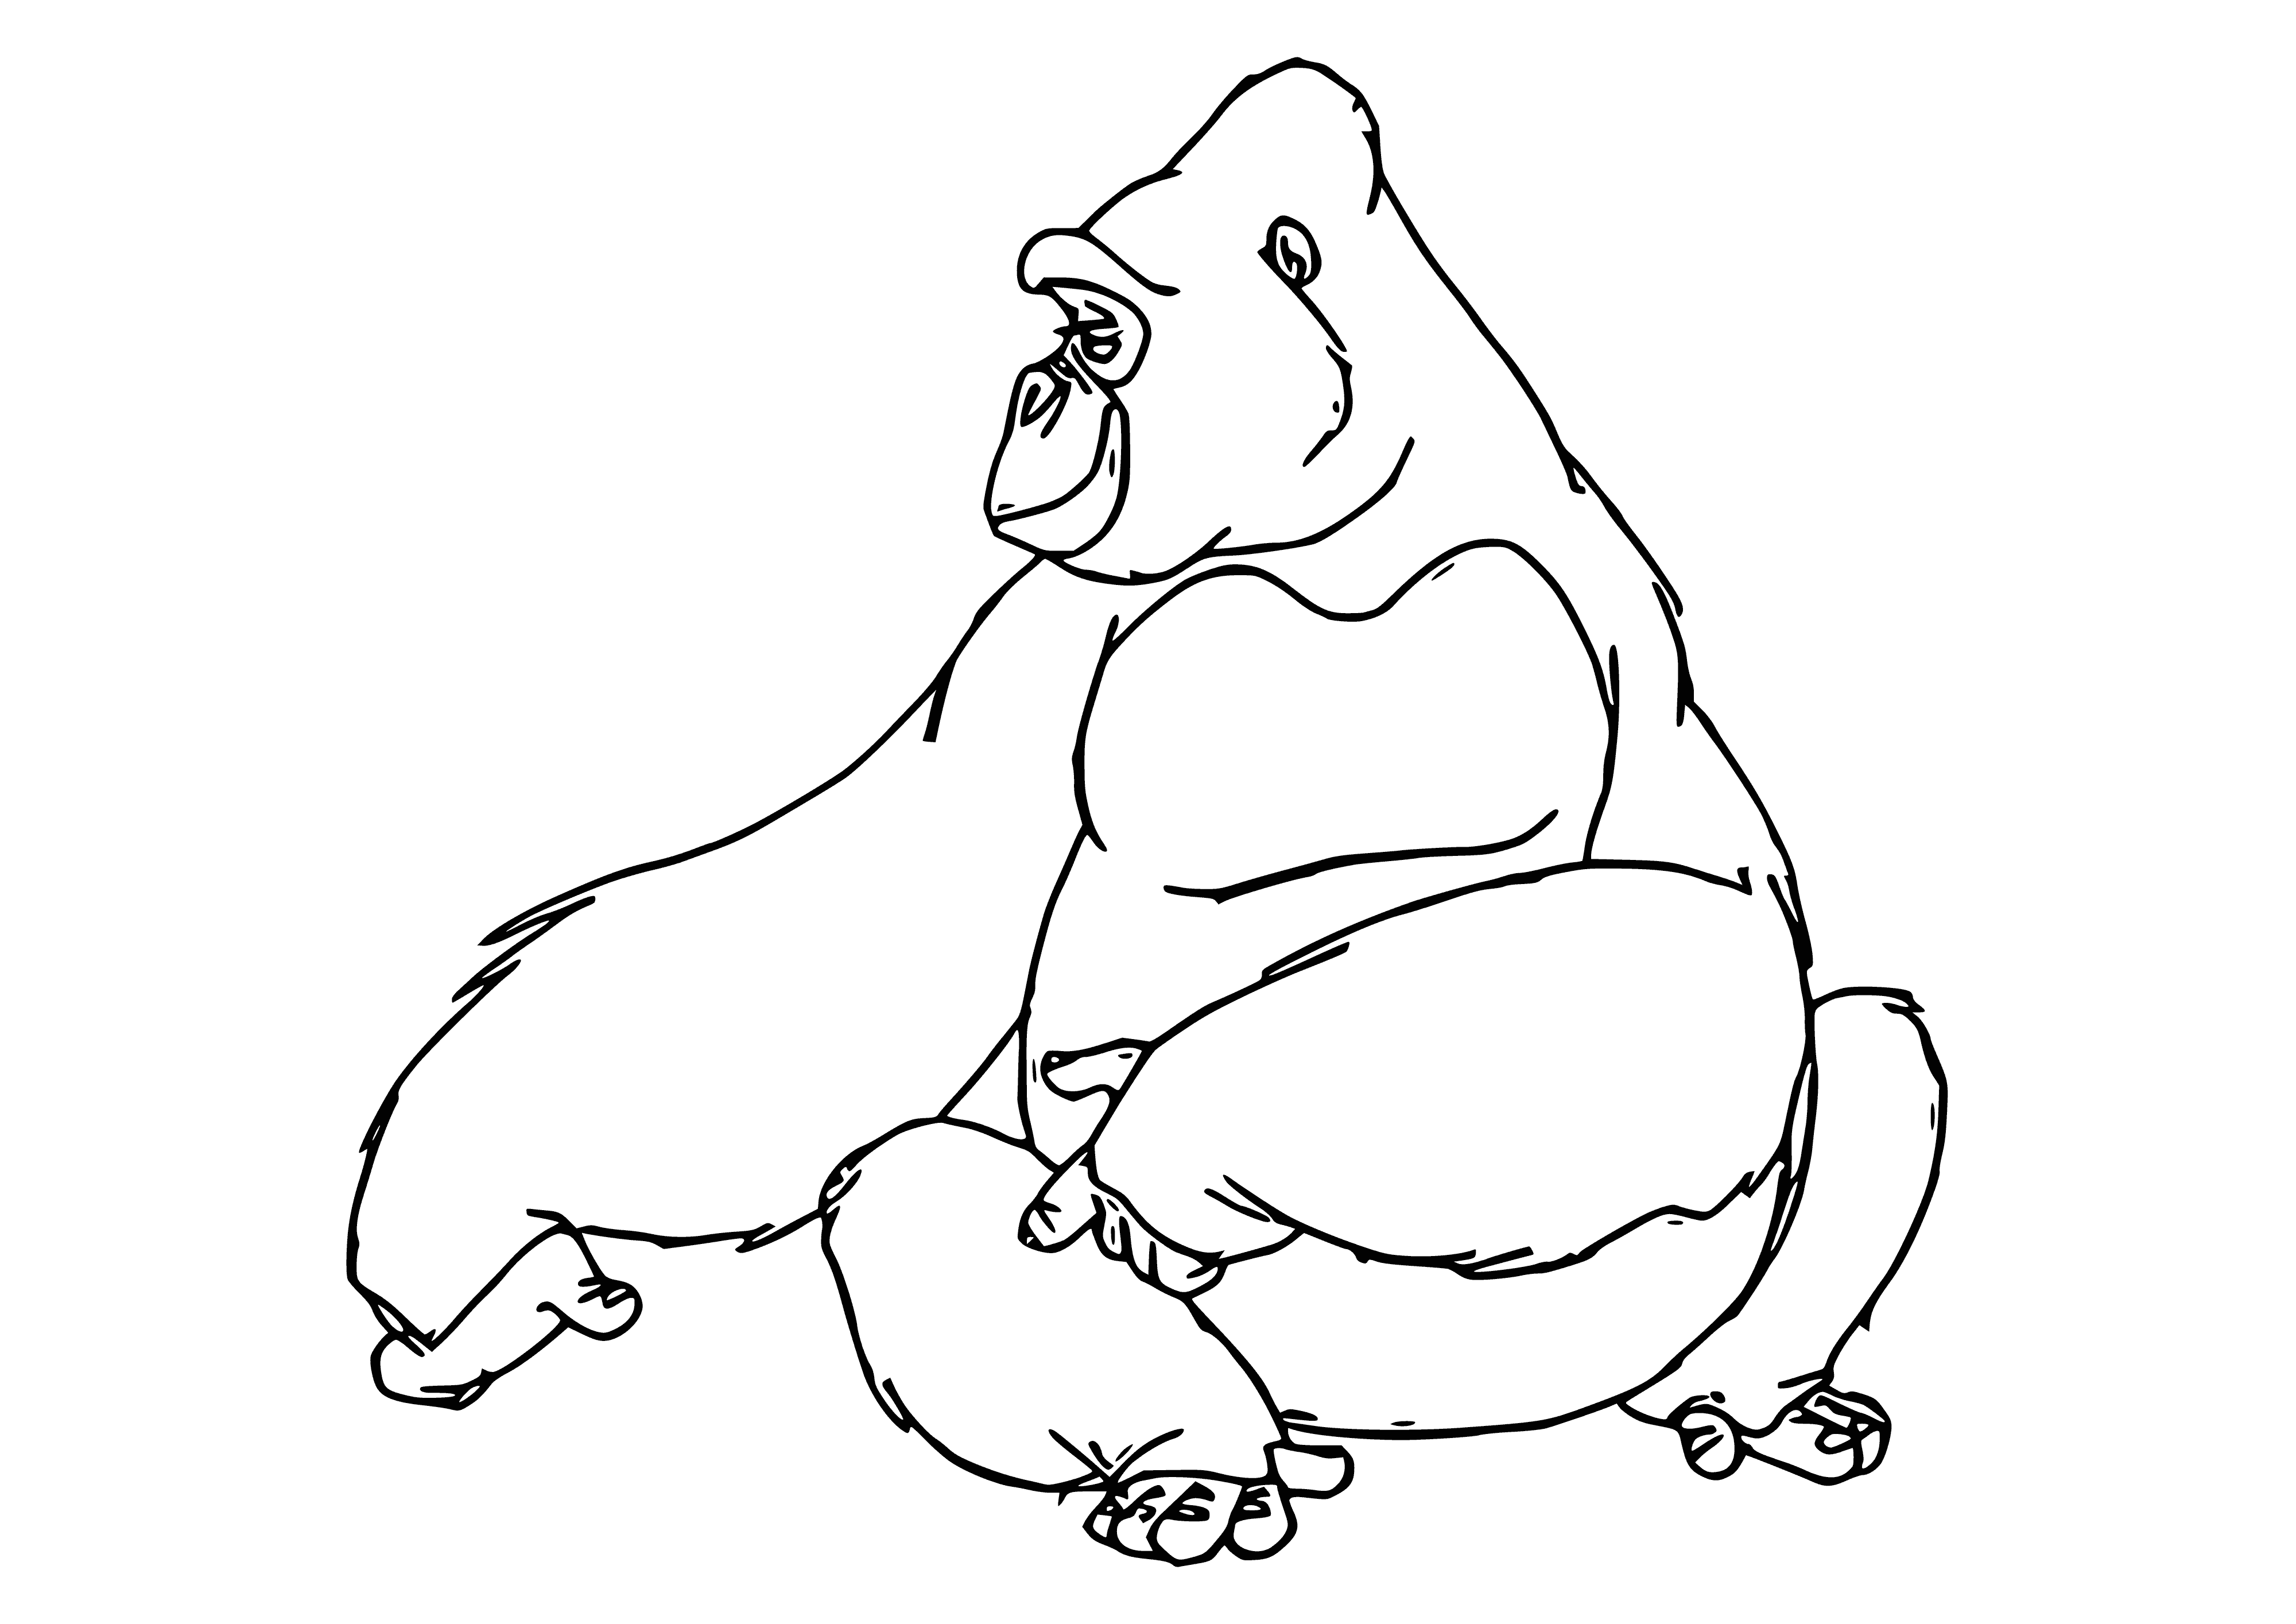 Gorilla Kala coloring page